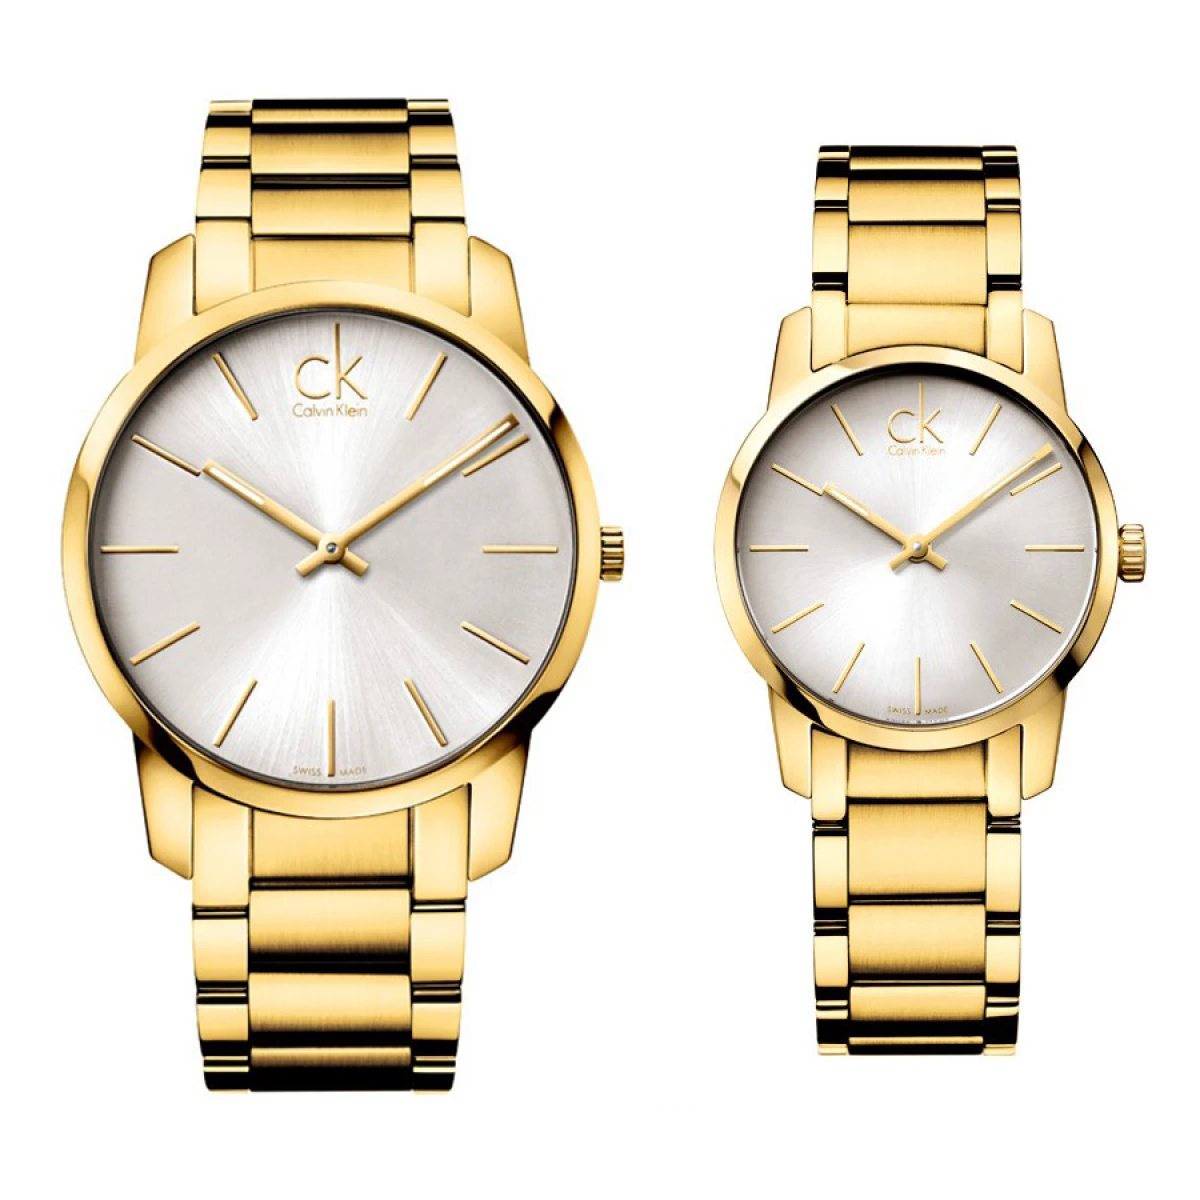 K2g21546 K2g23546 1200x1200 - Най-добрите часовници за двойки - Аксесоари